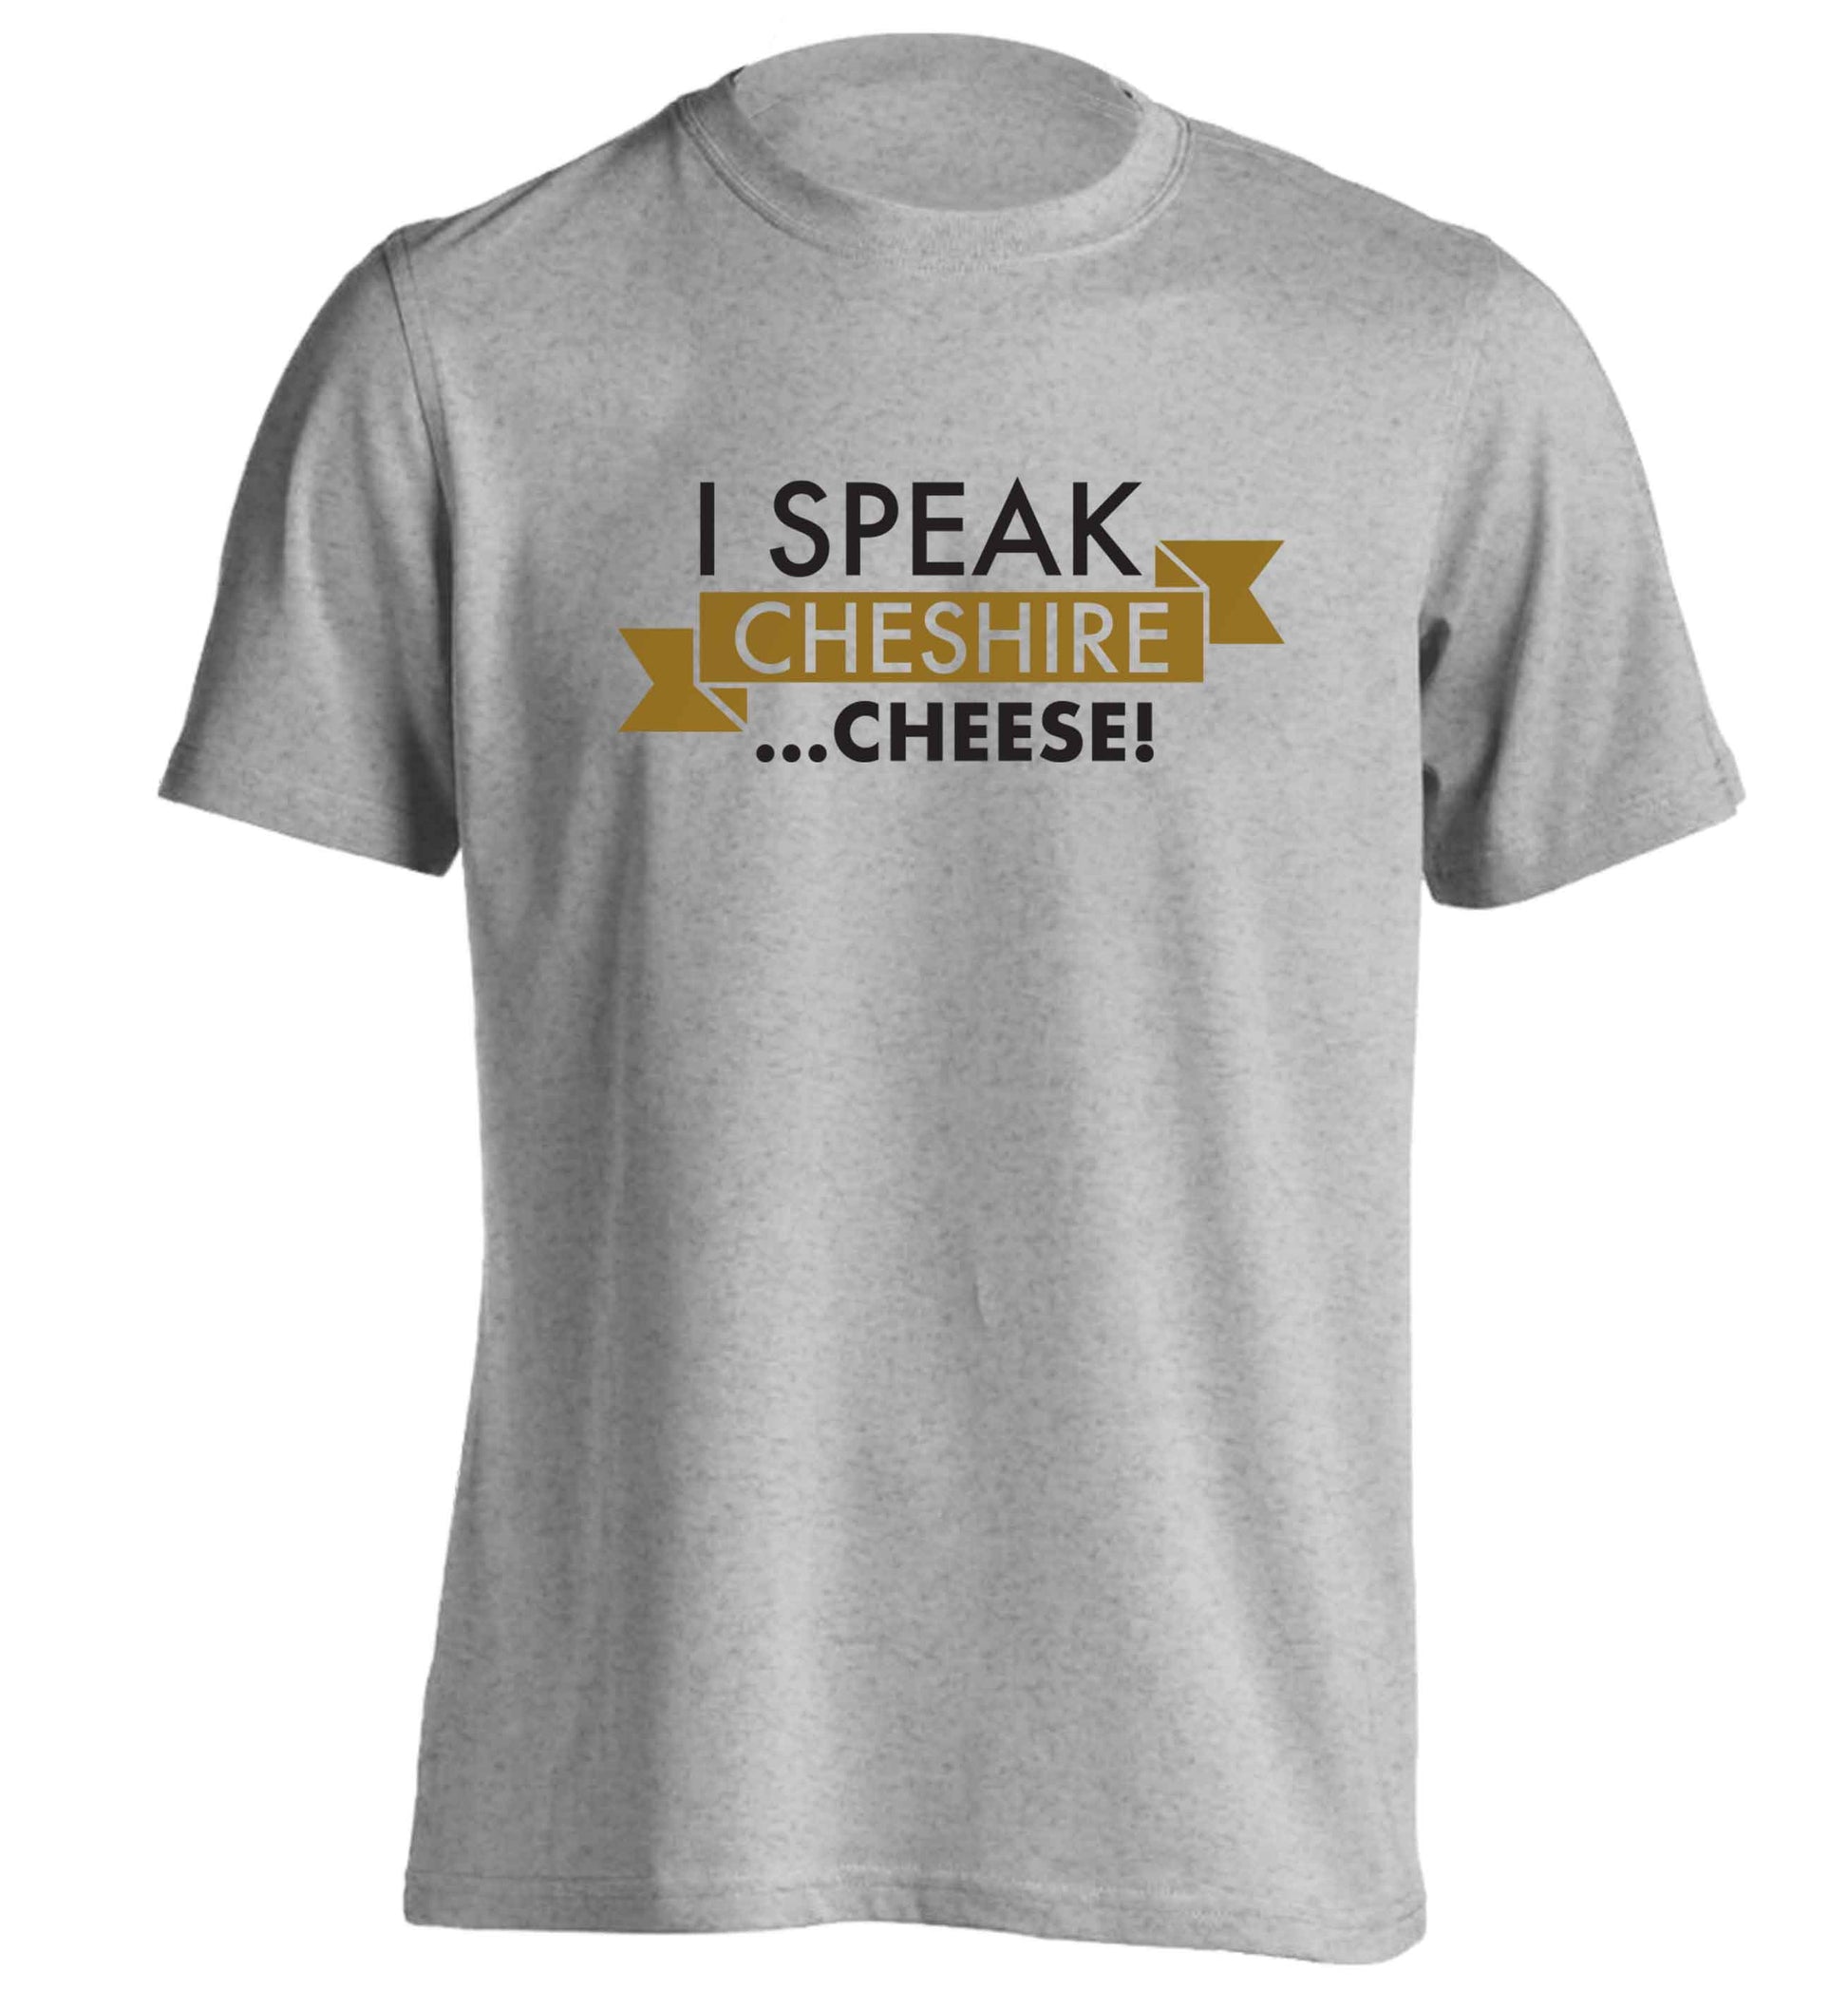 I speak Cheshire cheese adults unisex grey Tshirt 2XL